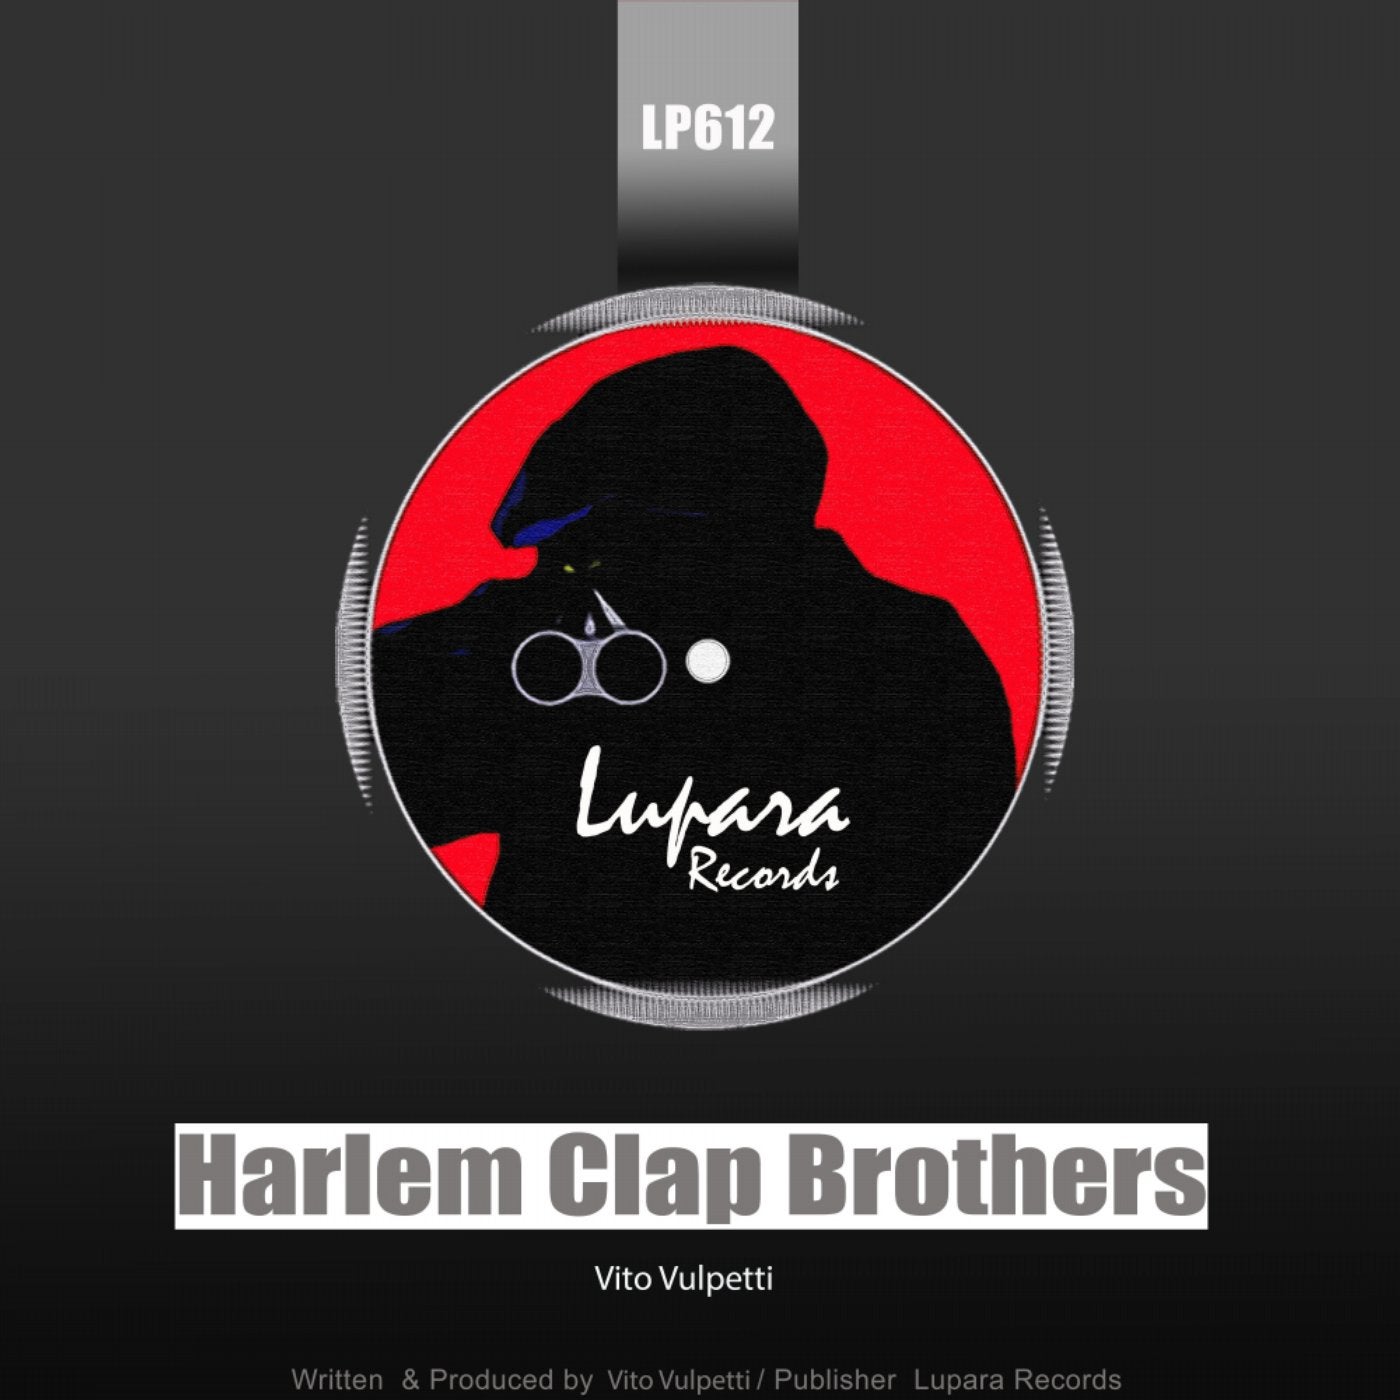 Harlem Clap Brothers